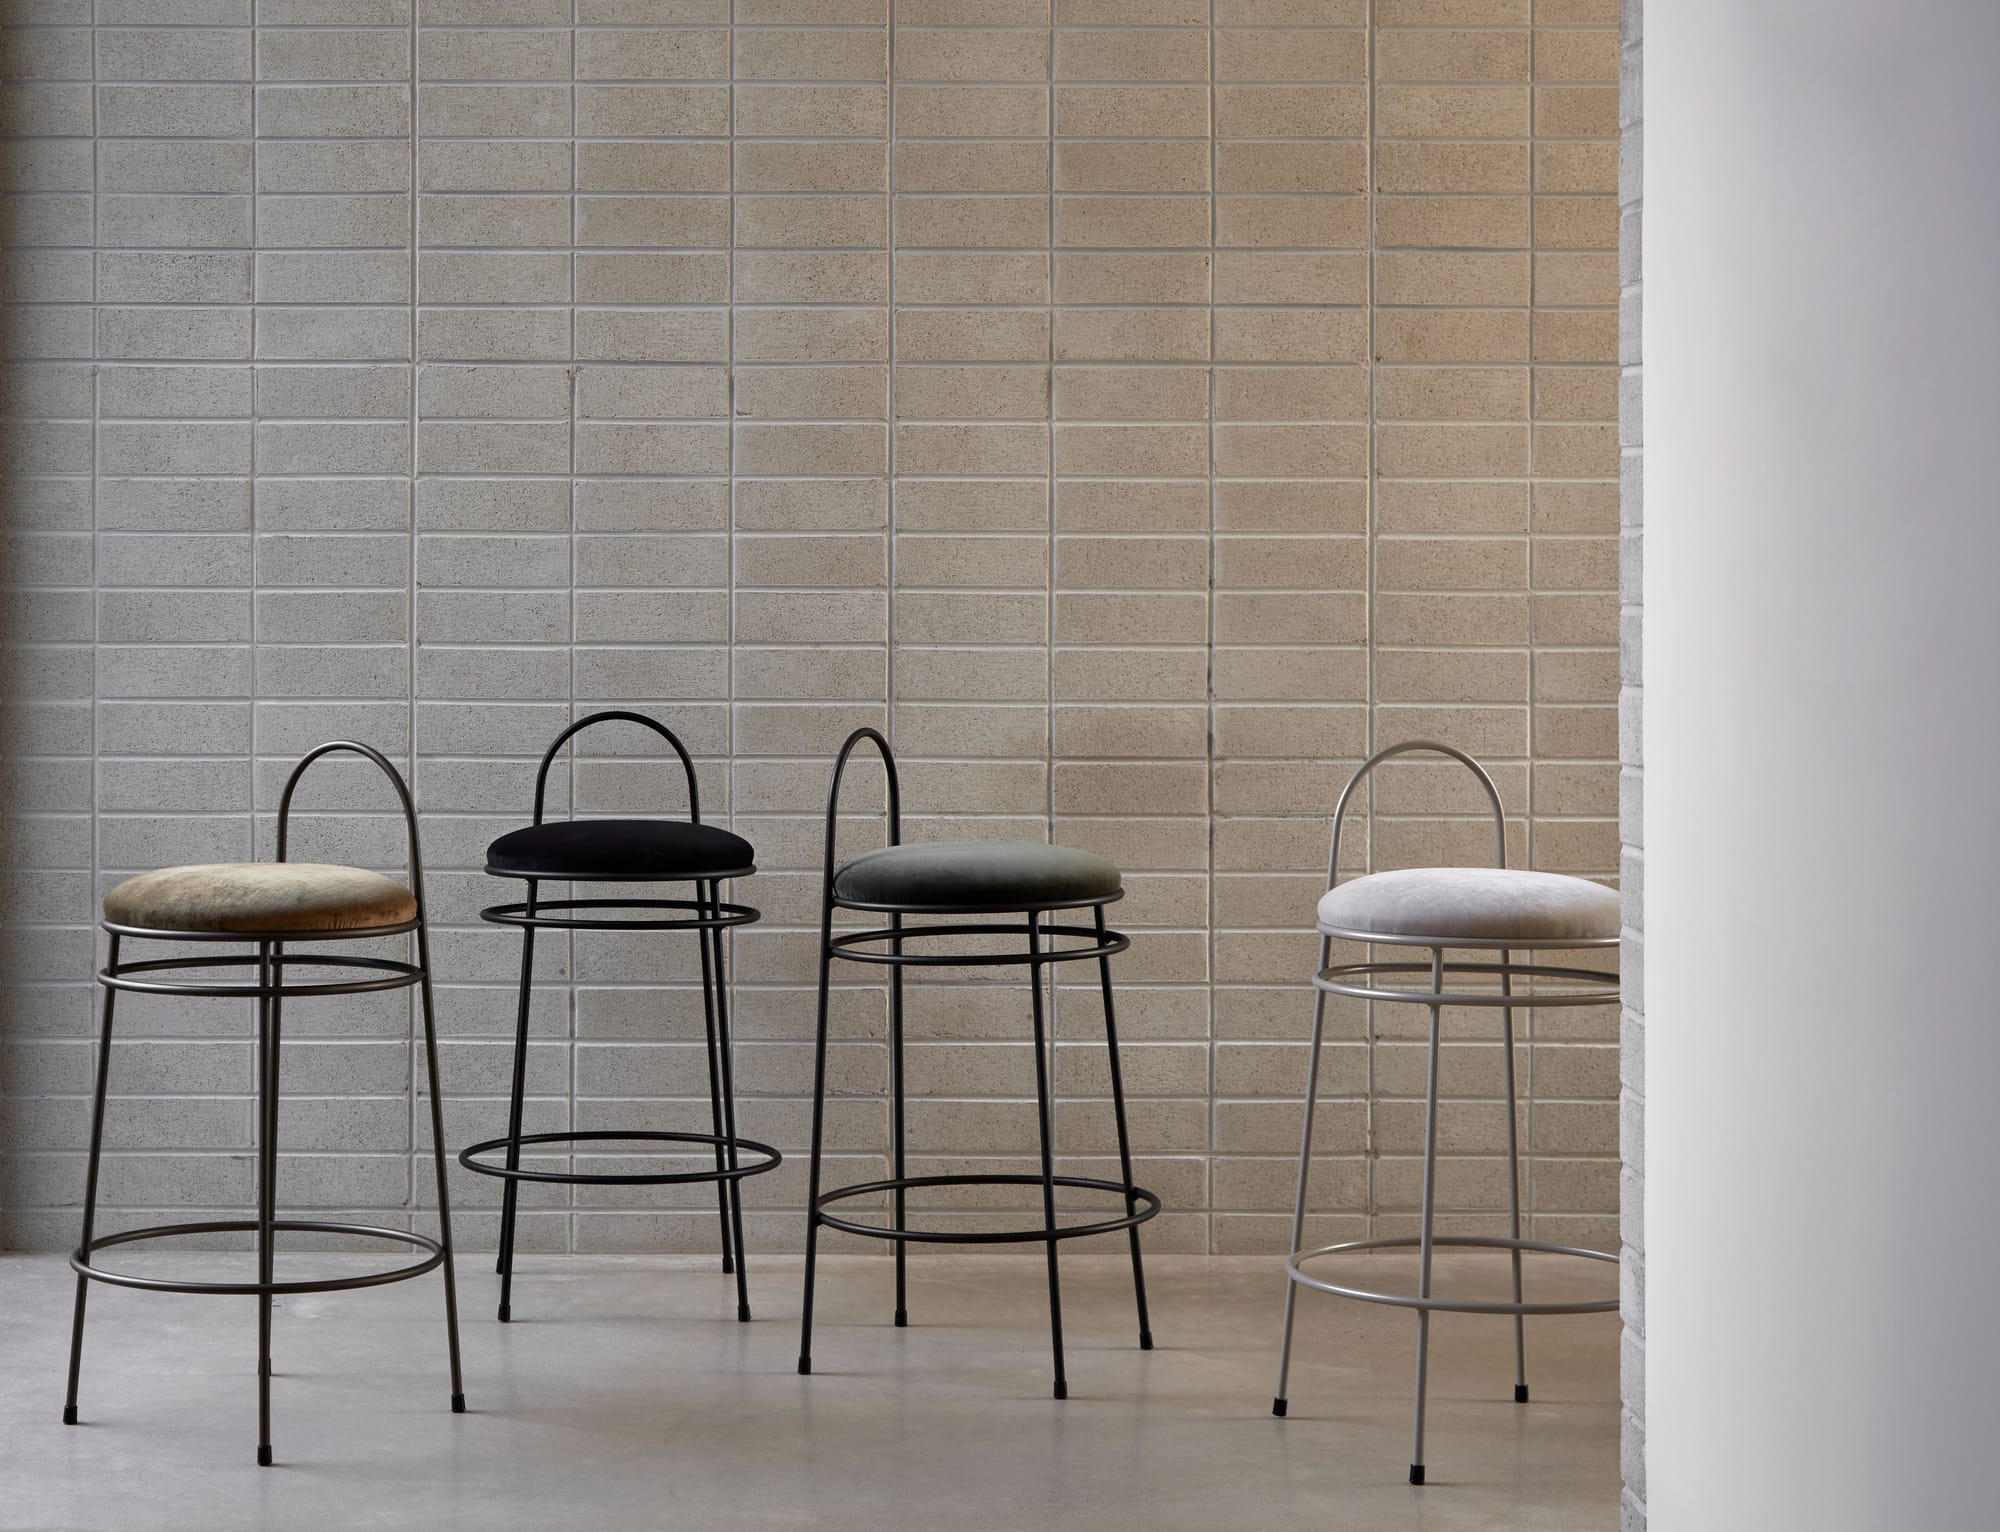 Zenn Design showing a range of stools